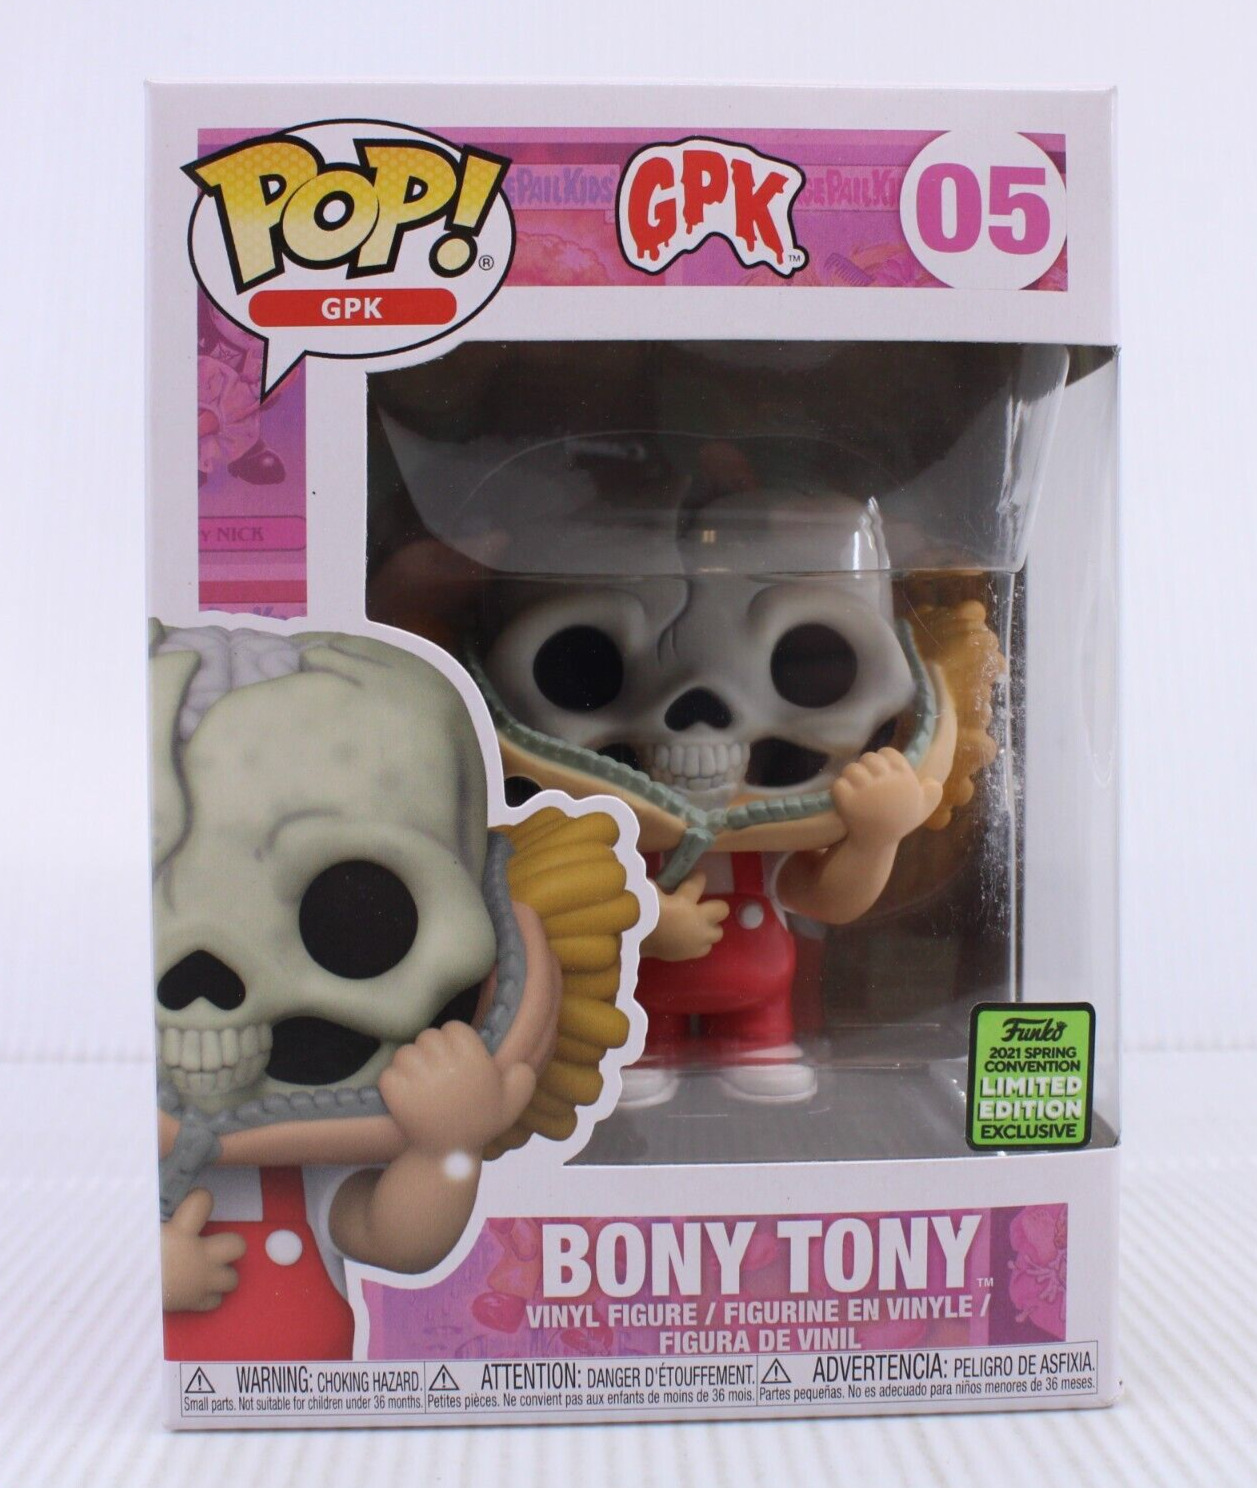 G2 Funko Pop GPK 2021 Spring BONY TONY Garbage Pail Kids Vinyl Figure 05